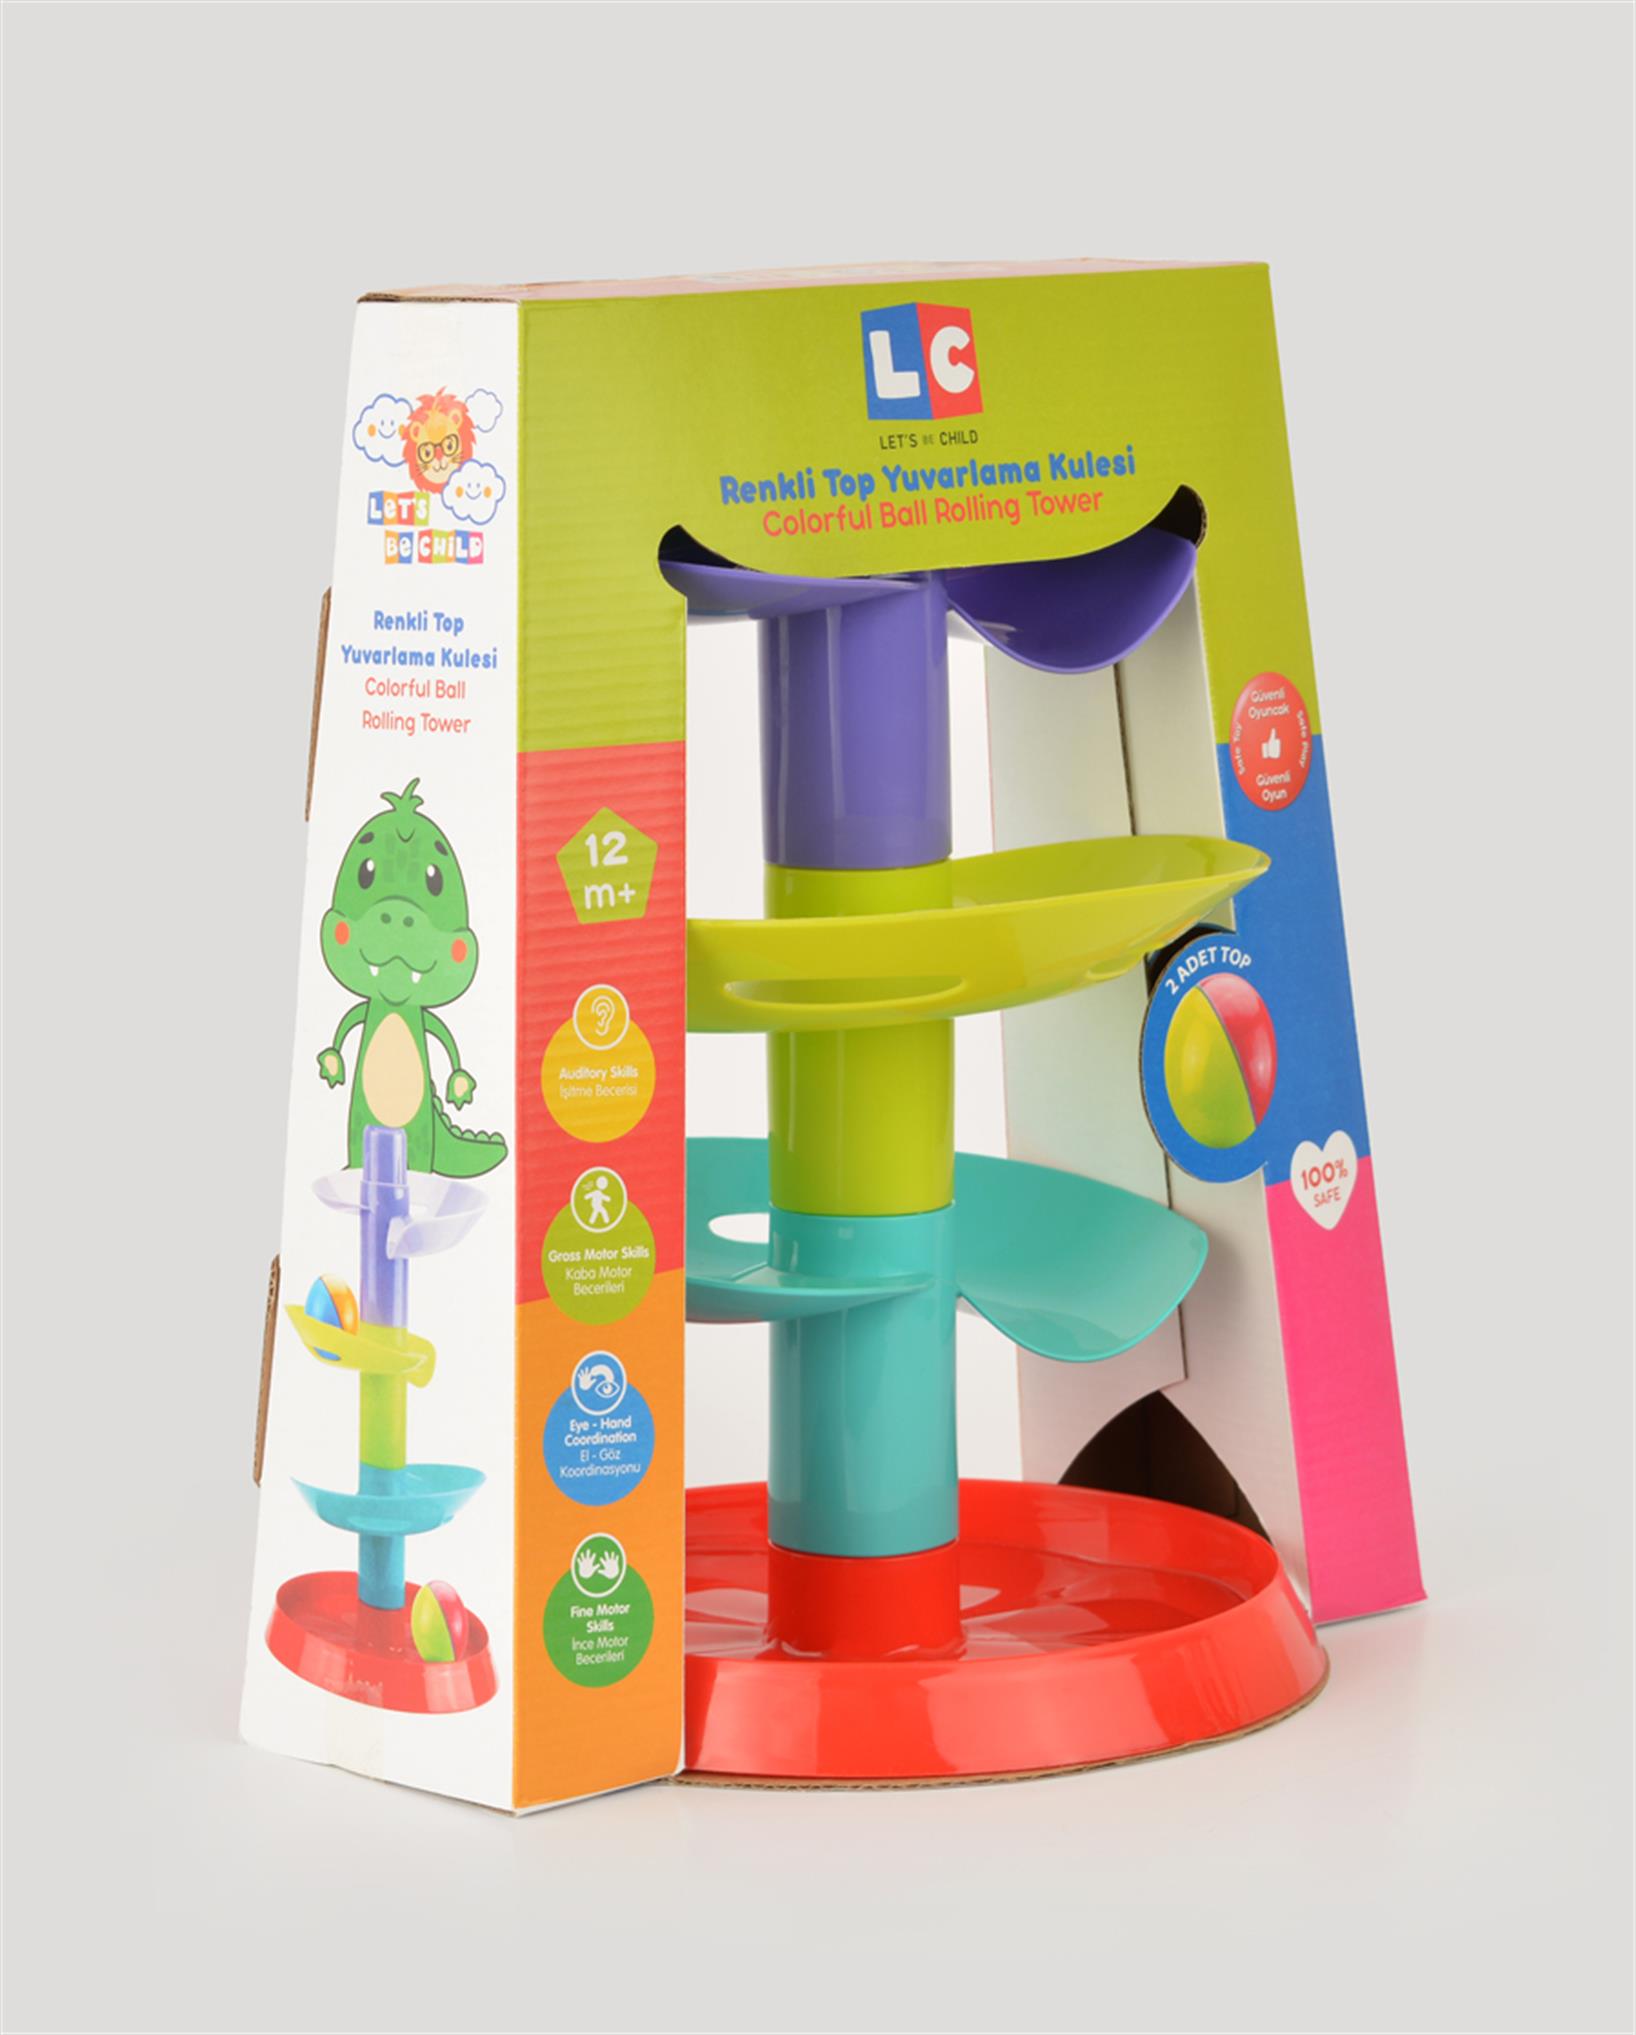 LC Renkli Top Yuvarlama Kulesi | Let's Be Child